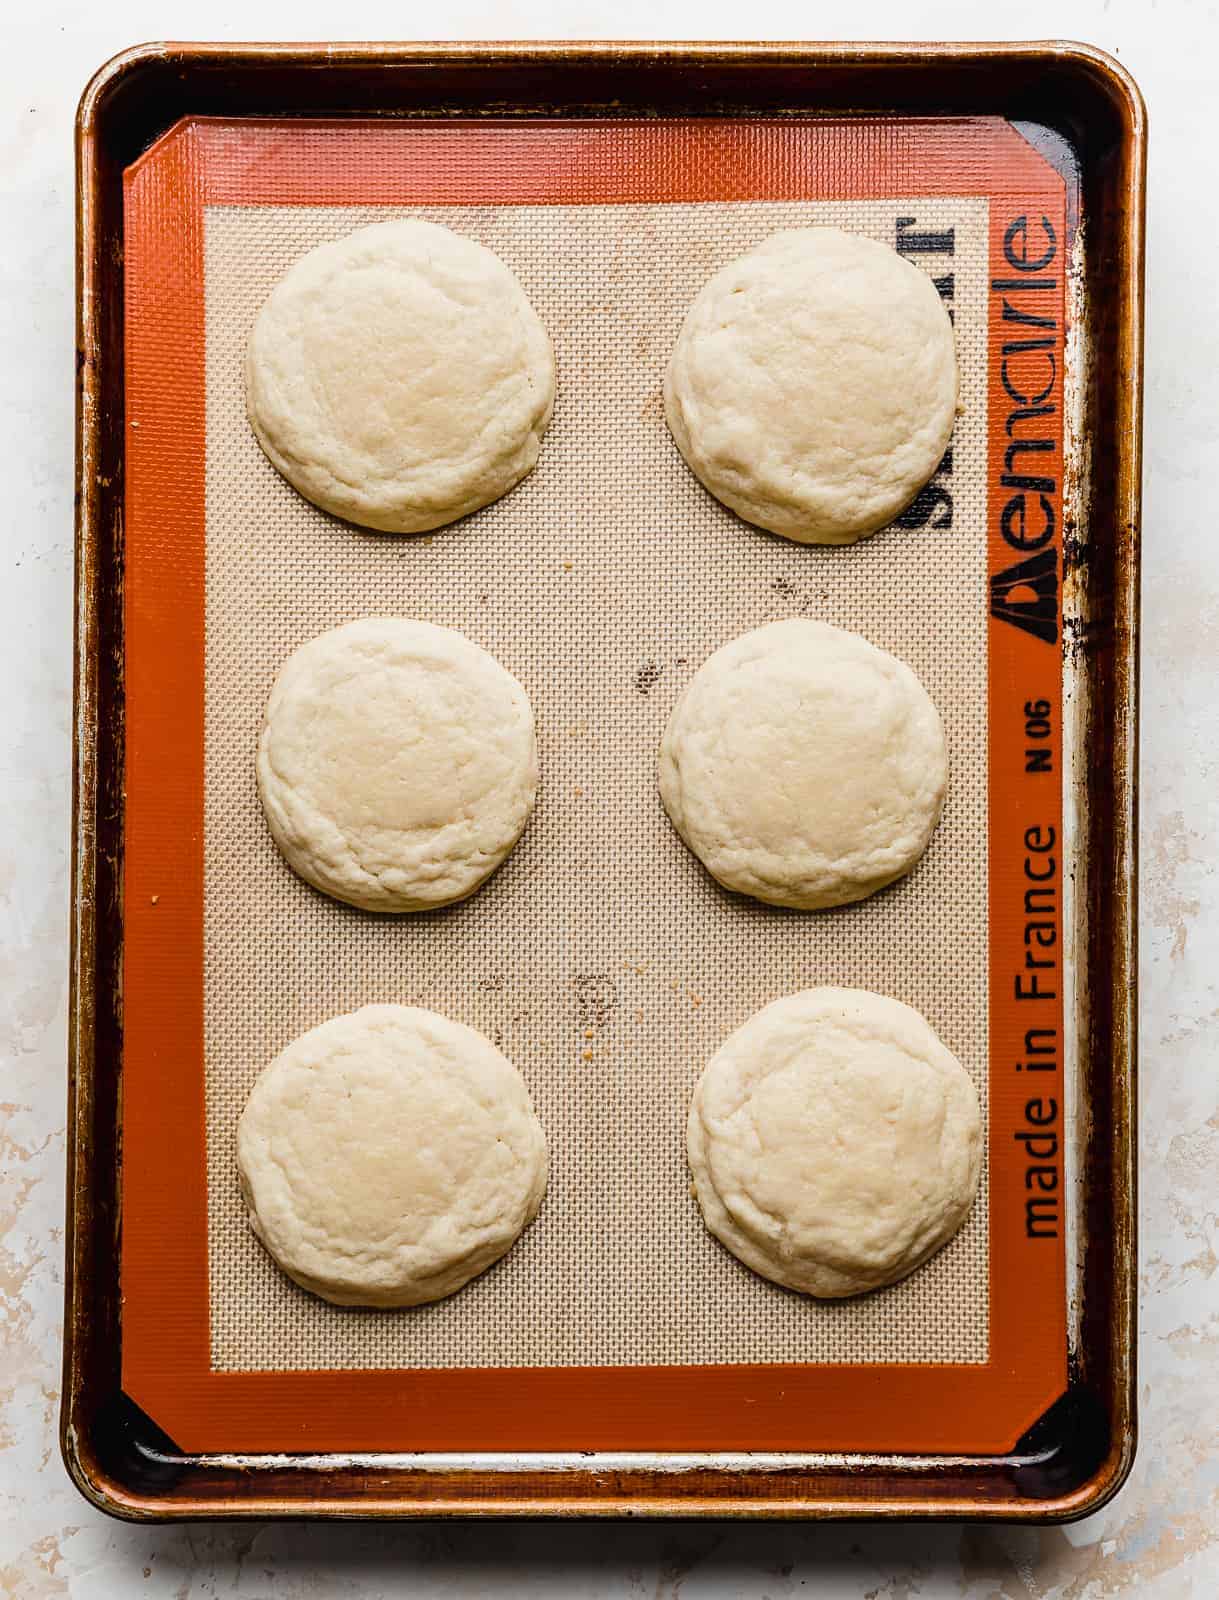 Six baked sugar cookies on a baking sheet.